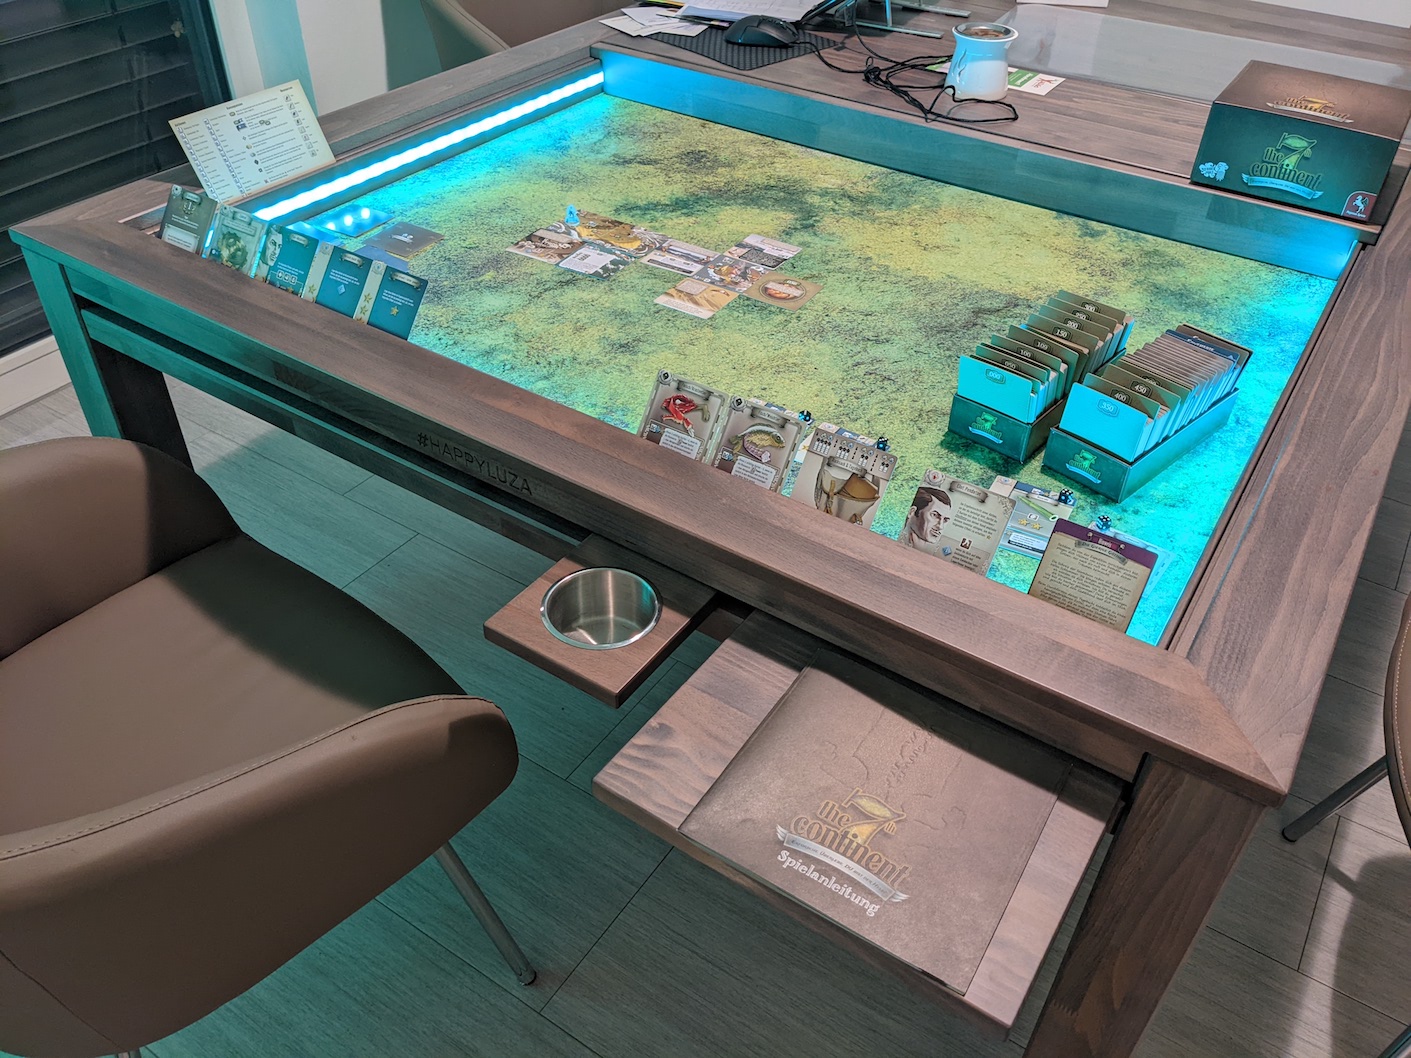 Brettspieltisch happyluza hungryluza gaming table top